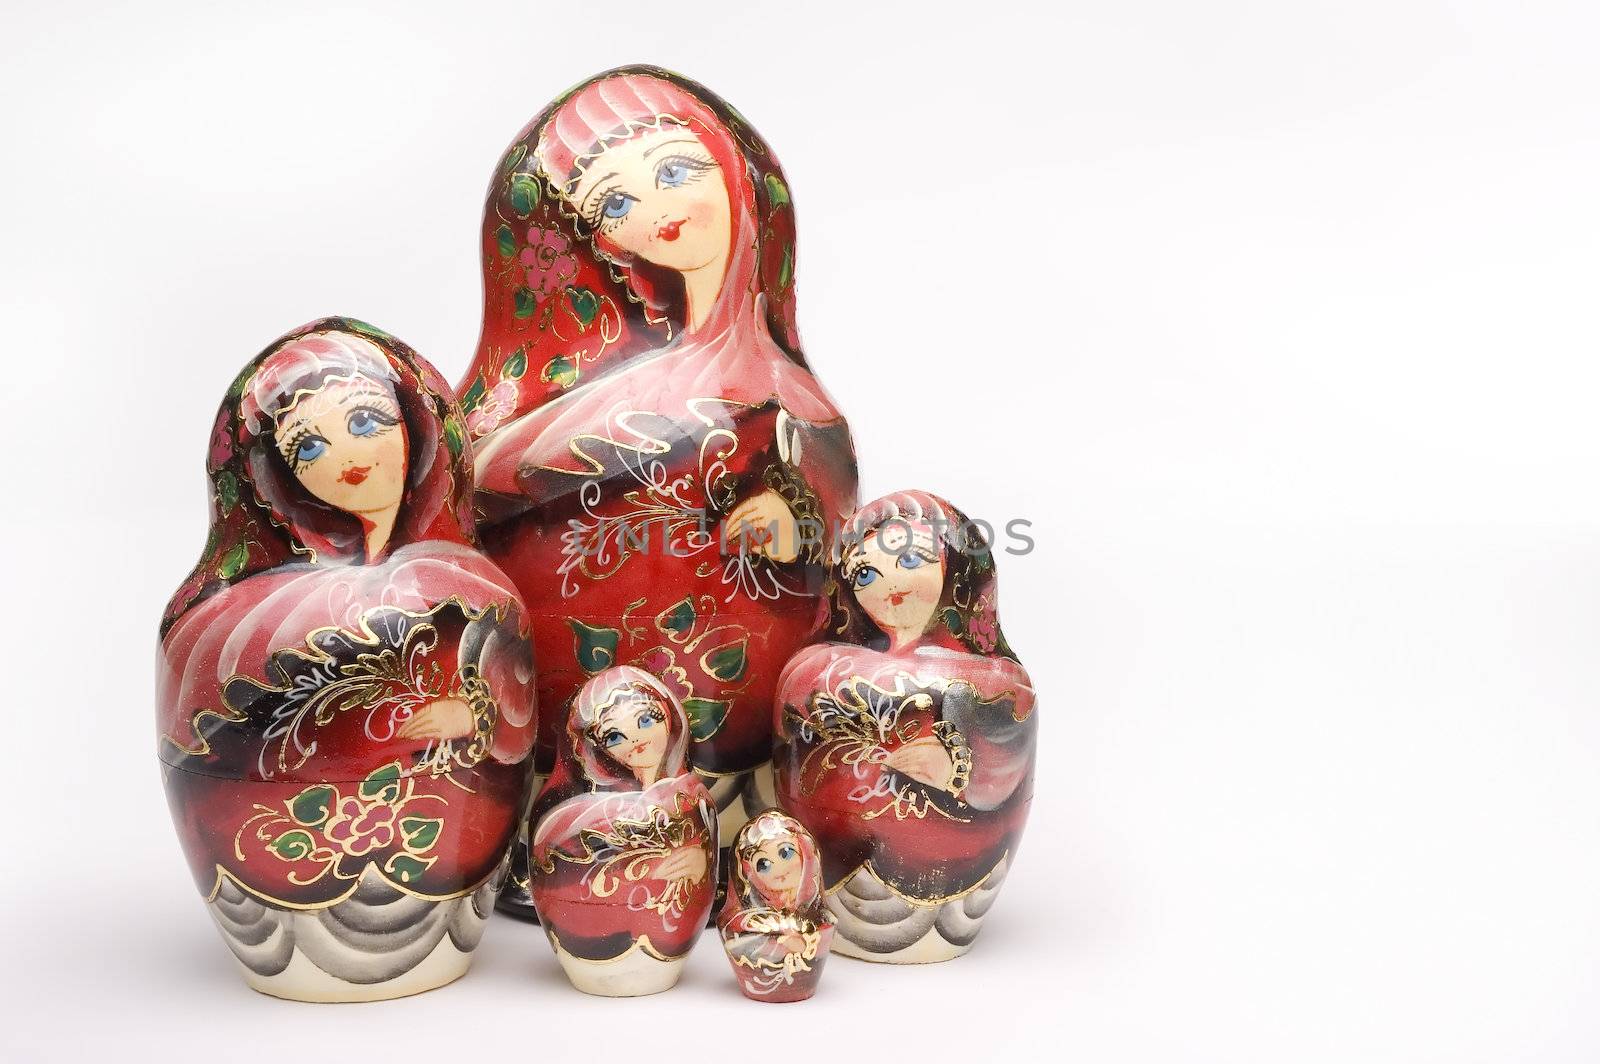 Russian Nesting Dolls by vladikpod